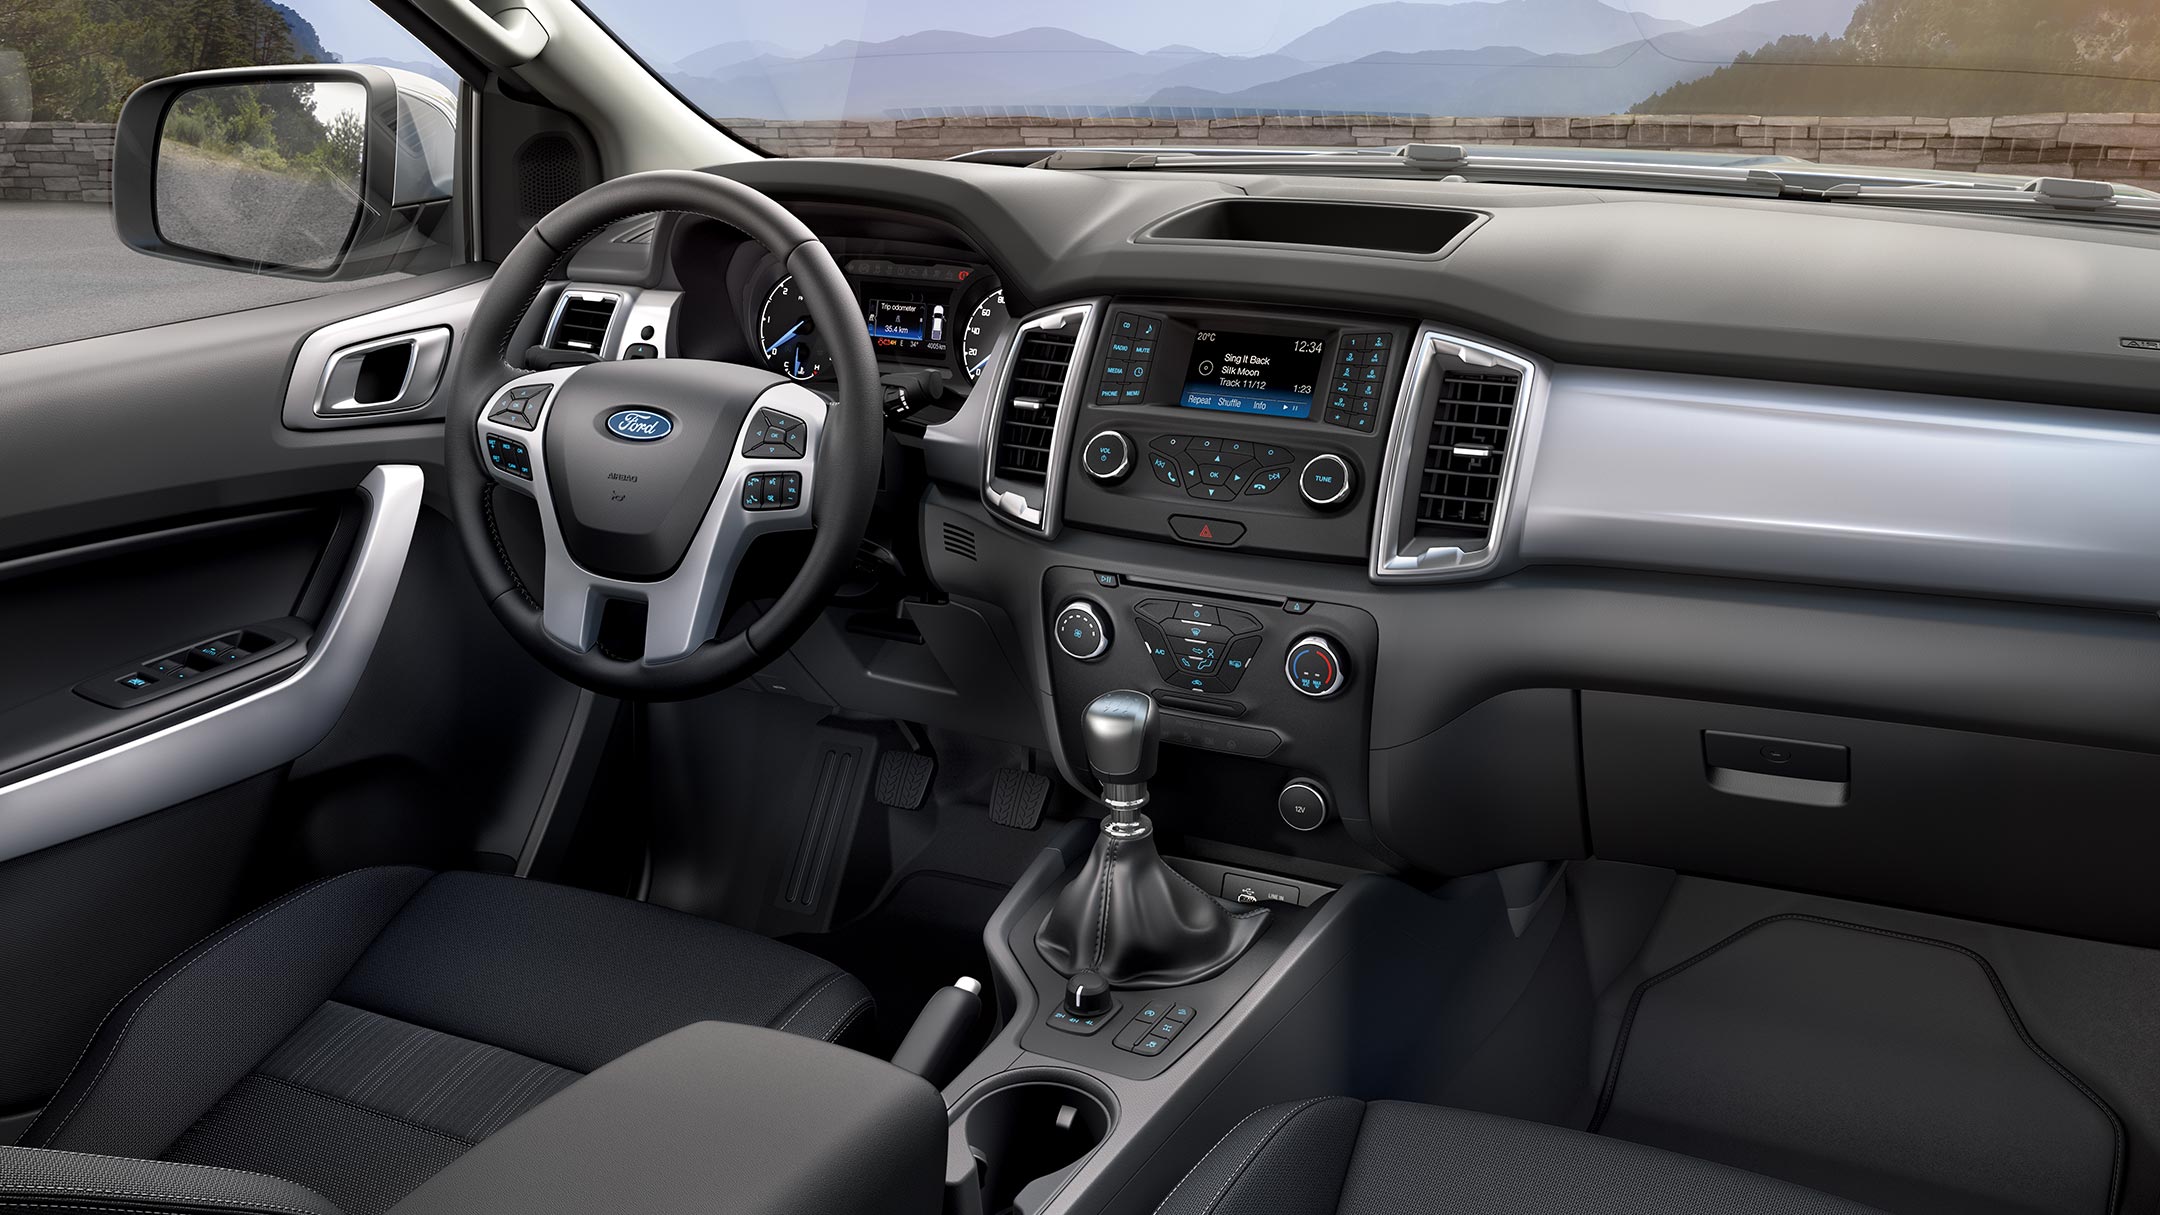 Ford Ranger XLT interior cabin